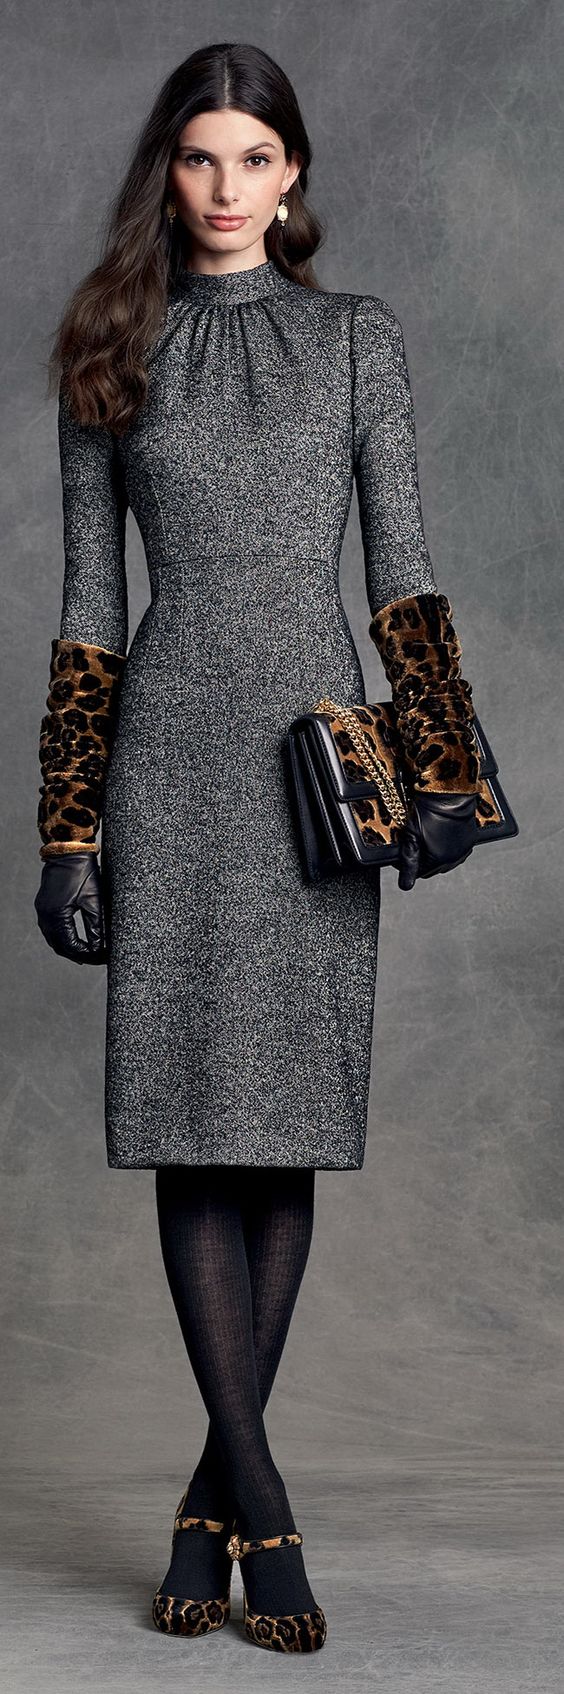 leopard-fashion-mannequin-feminin